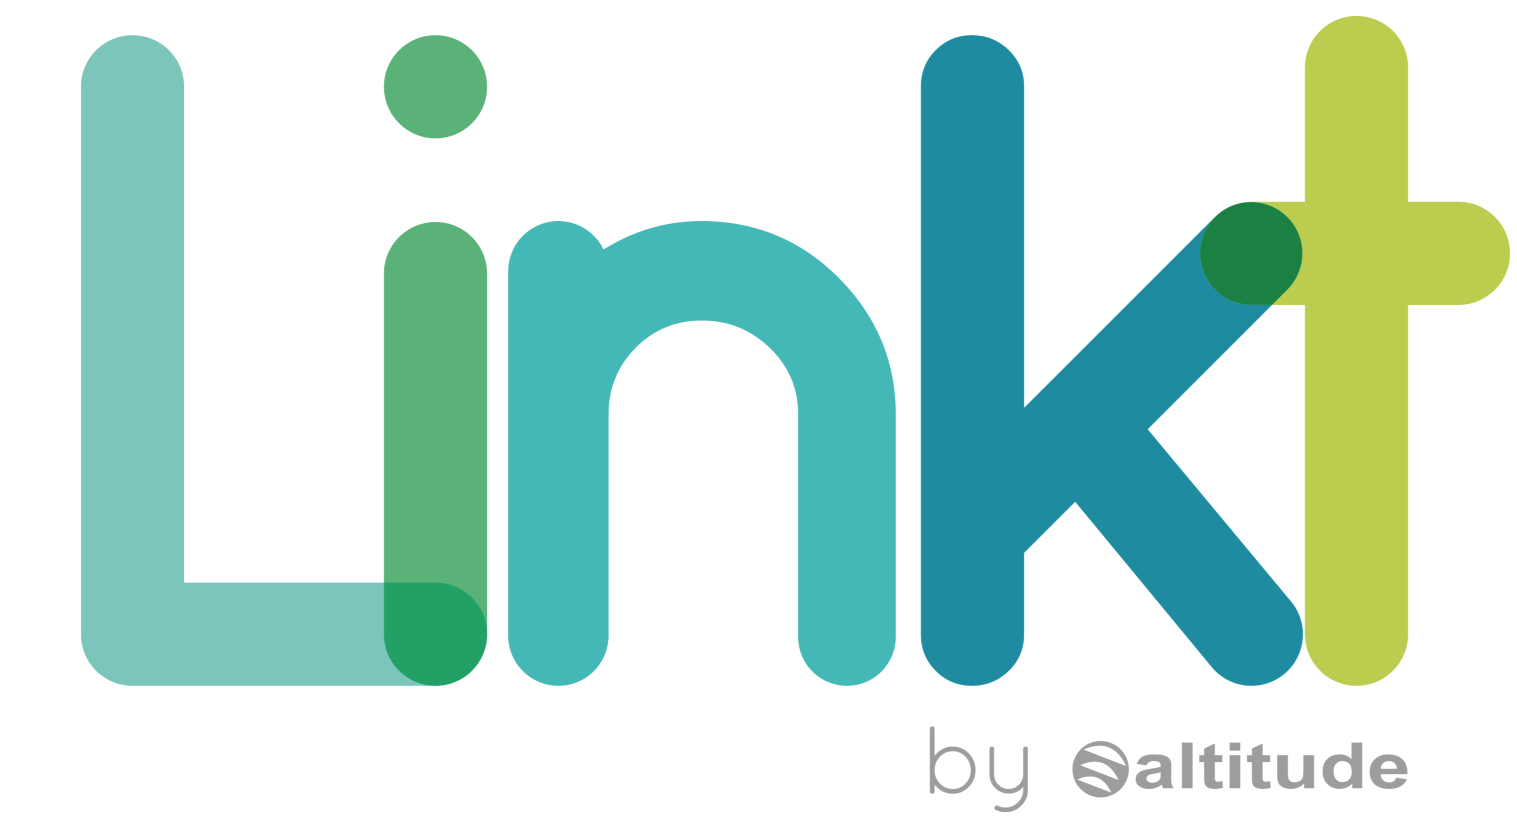 Linkt logo